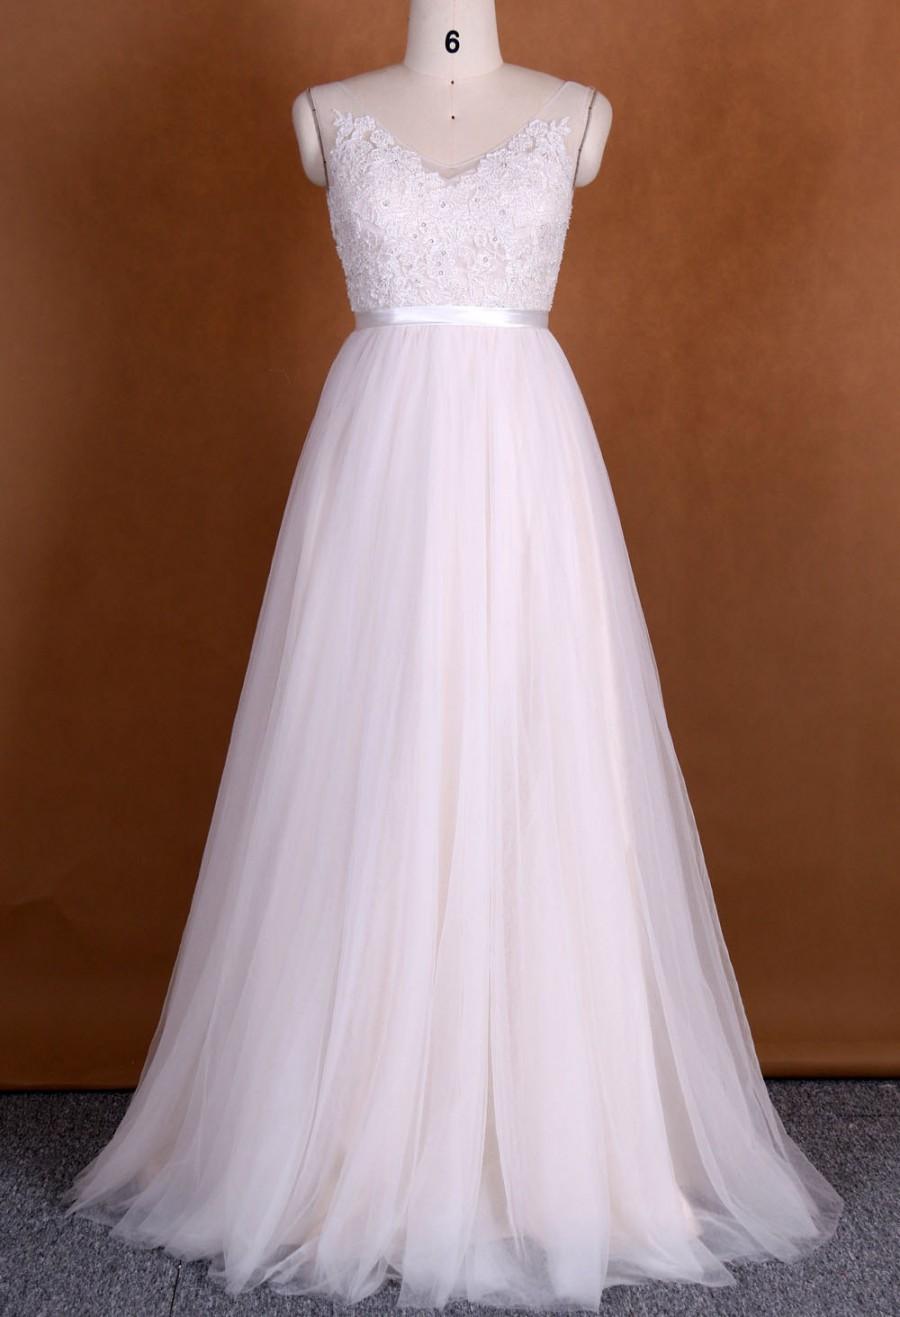 Mariage - V Neckline evening dress, beading lace appliques, low back, zipper up, floor length, Chiffion dress, bridesmaid dress, light pink dress